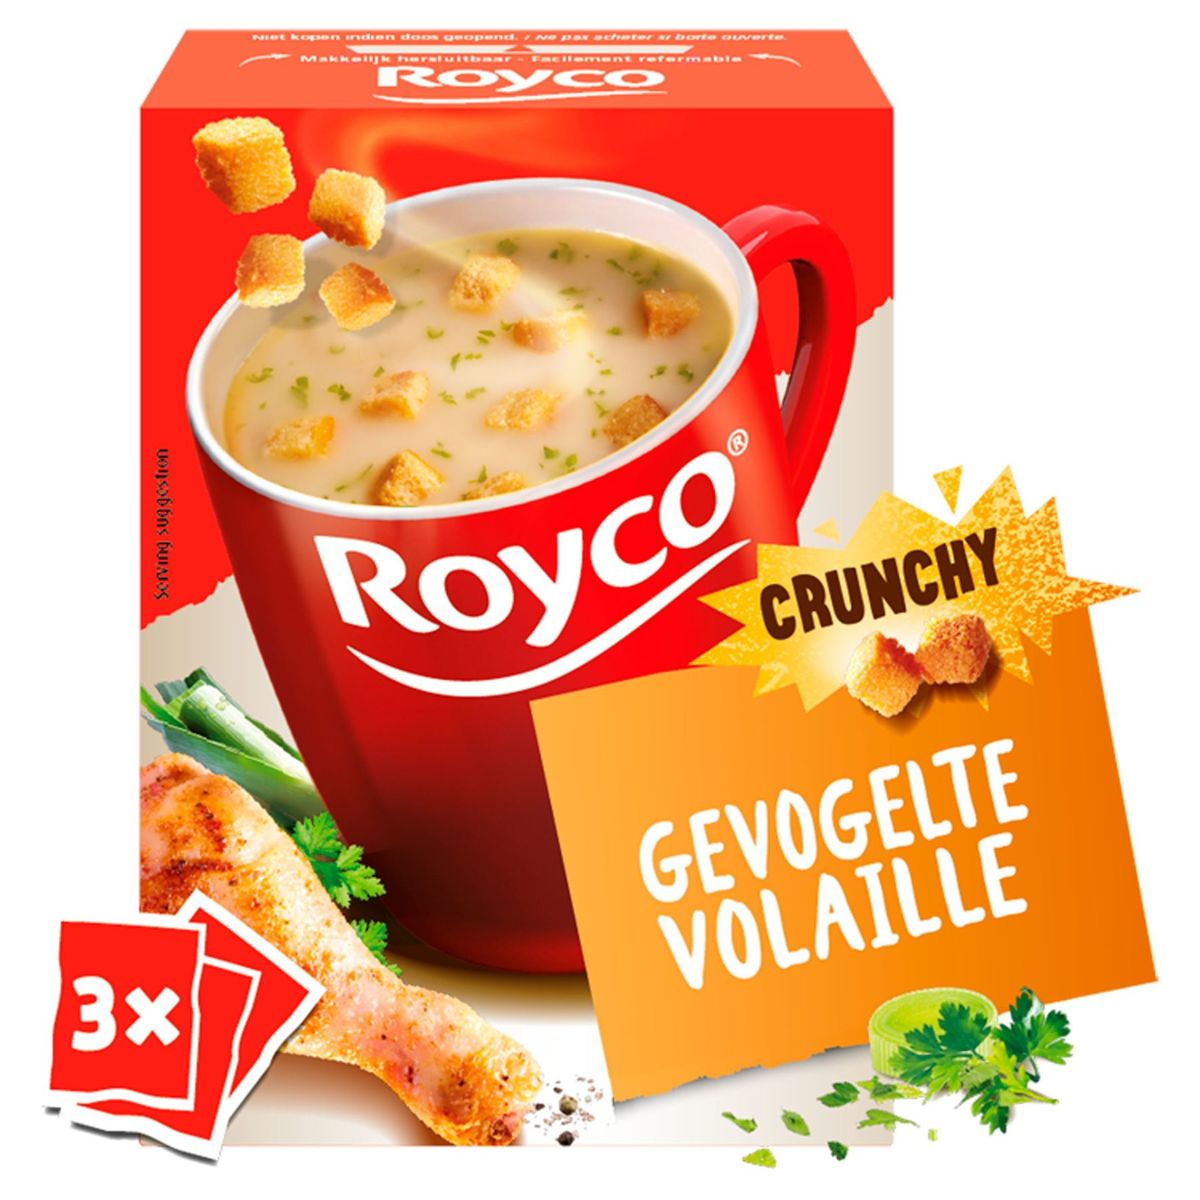 Royco Crunchy Gevogelte 3 x 20.5 g